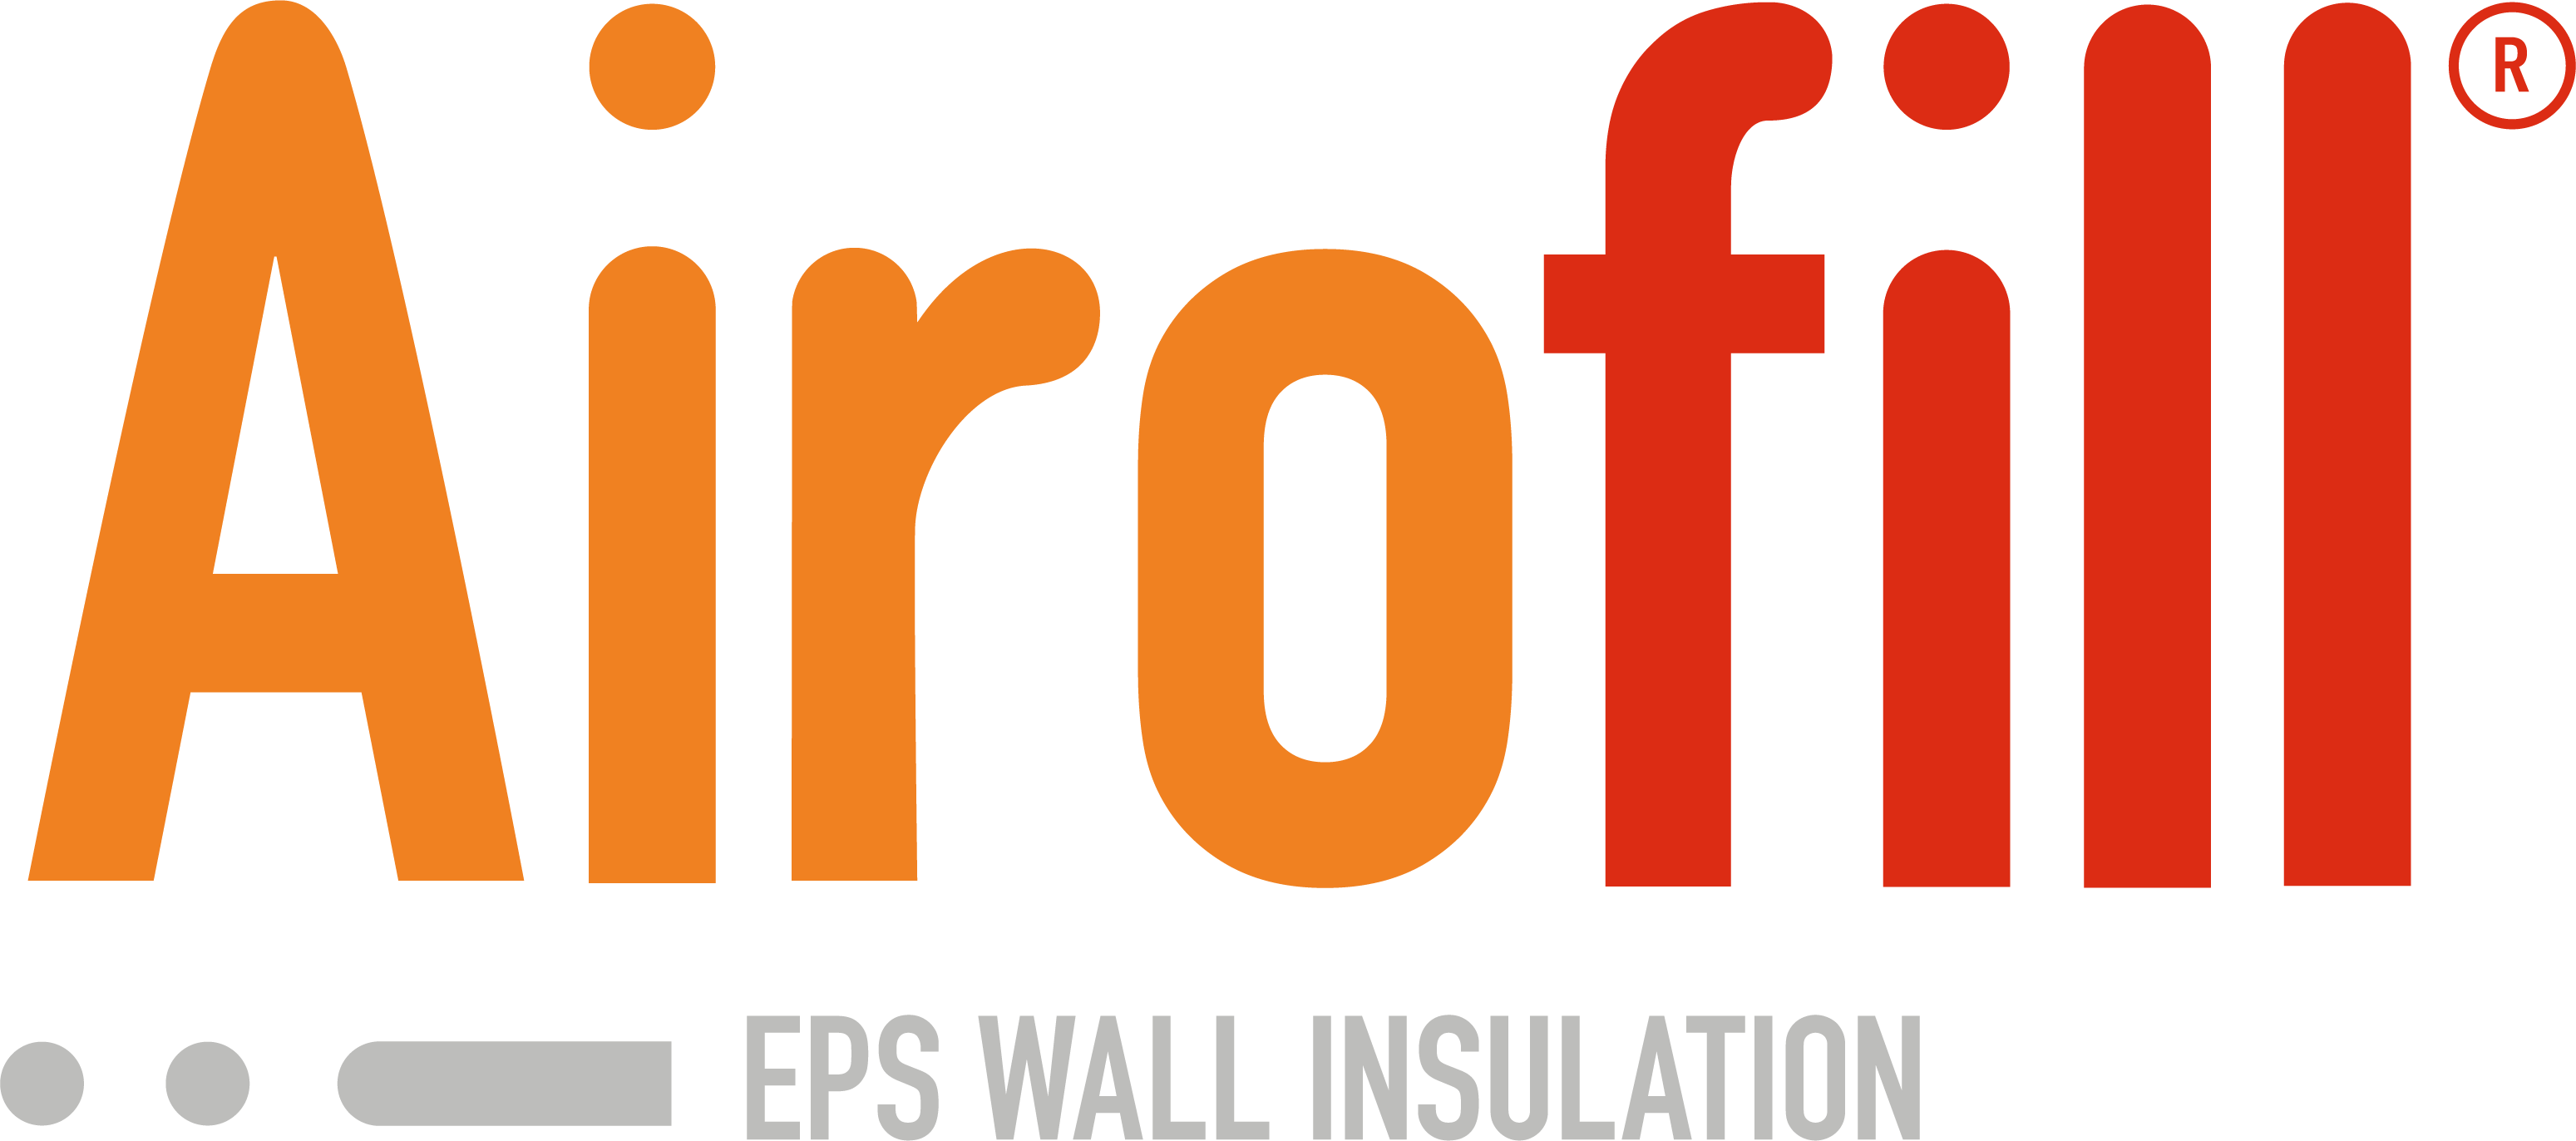 Airofill EPS Wall